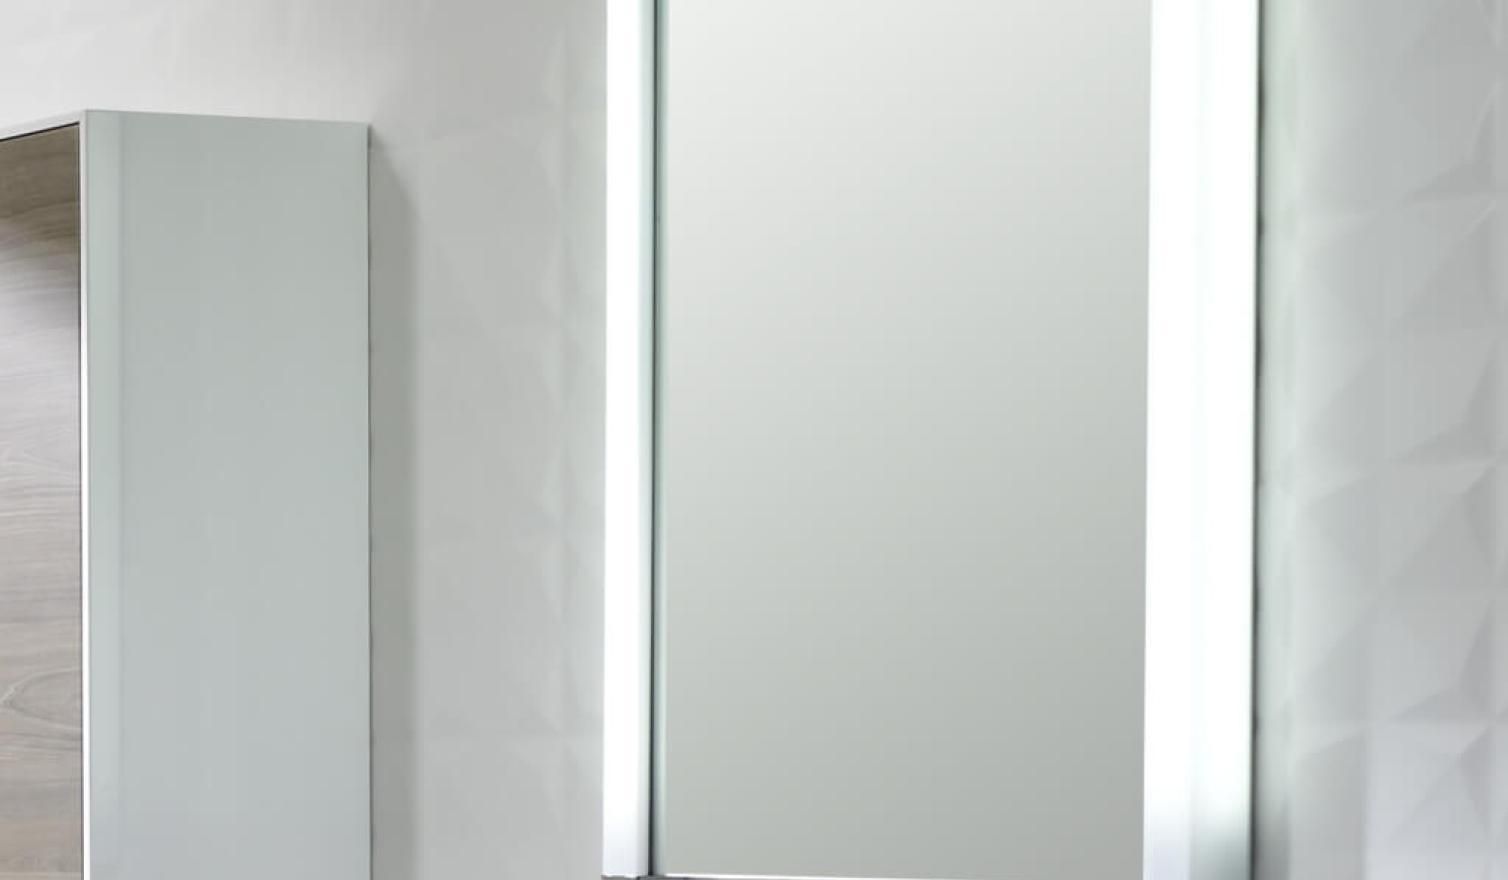 Unusual Graphic Of Mirror Vanity Diy Near Mirror Trim For Bathroom Throughout Custom Framed Mirrors Online (View 18 of 20)